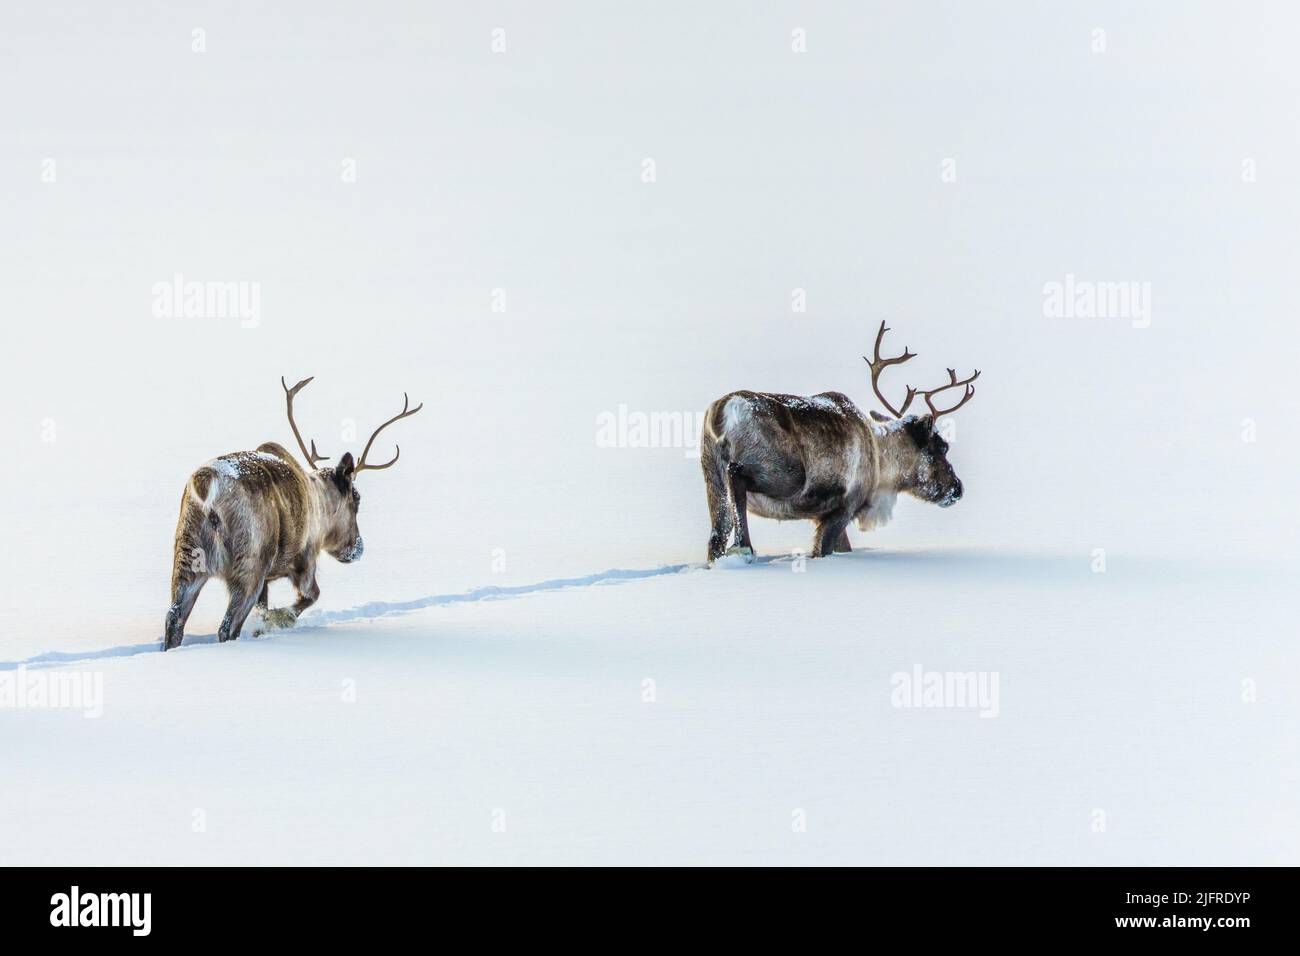 Two Reindeers, Rangifer tarandus, walking in deep snow, Kvikkjokk, Swedish Lapland, Sweden Stock Photo